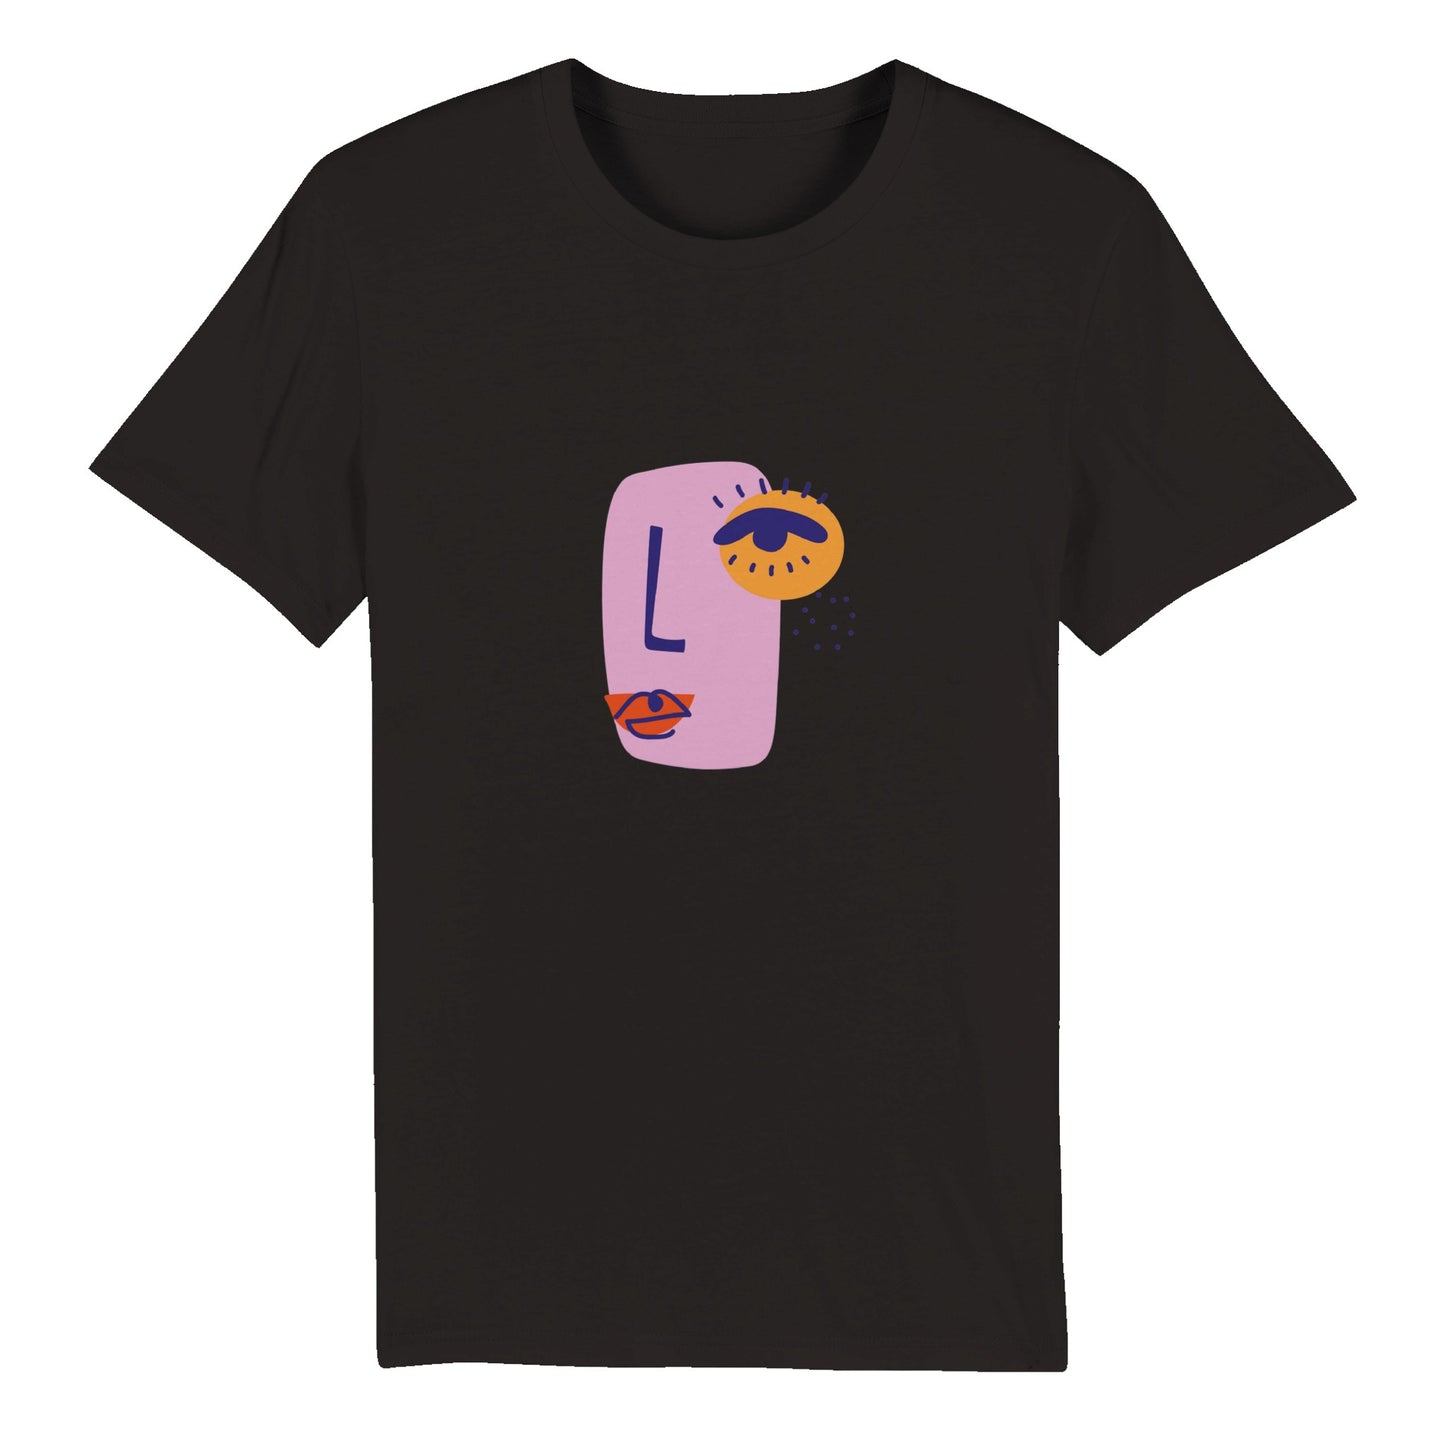 100% Organic Unisex T-shirt/Abstract-Face